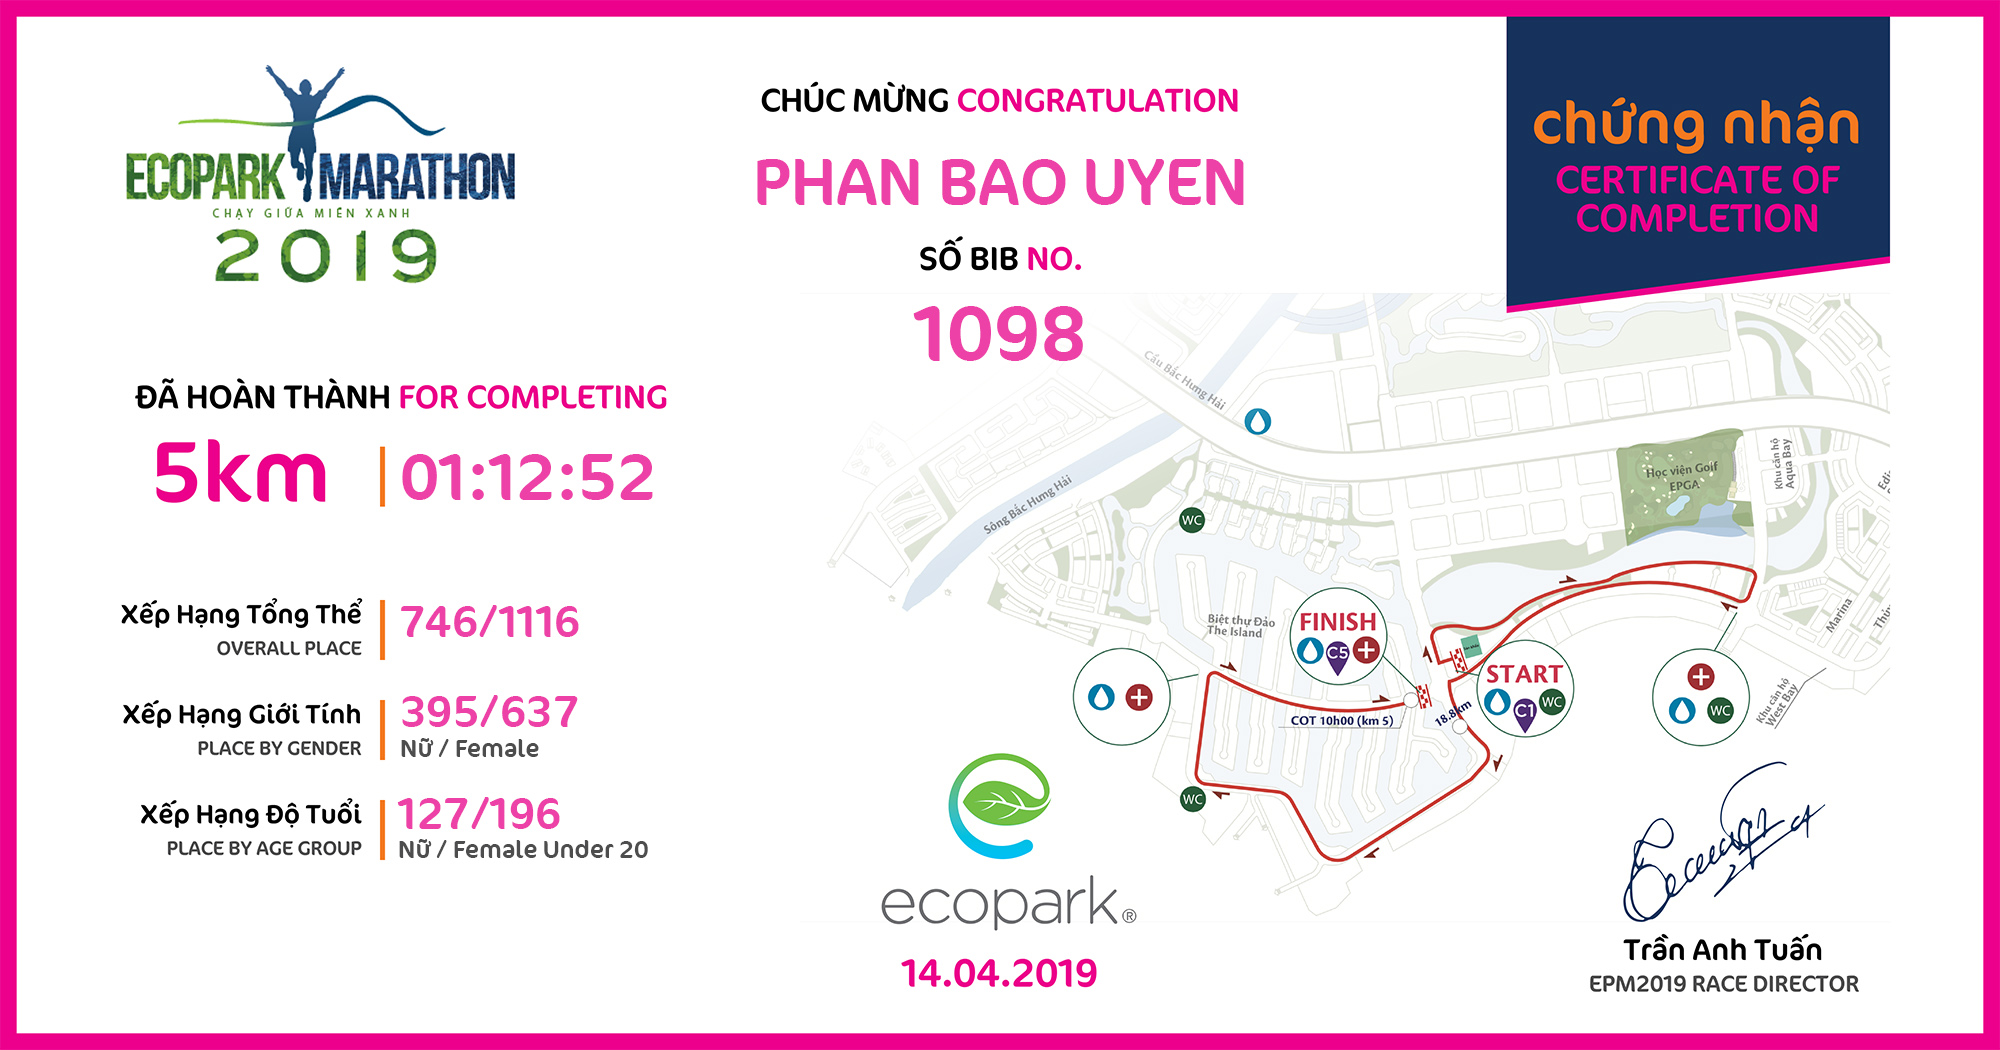 1098 - Phan Bao Uyen